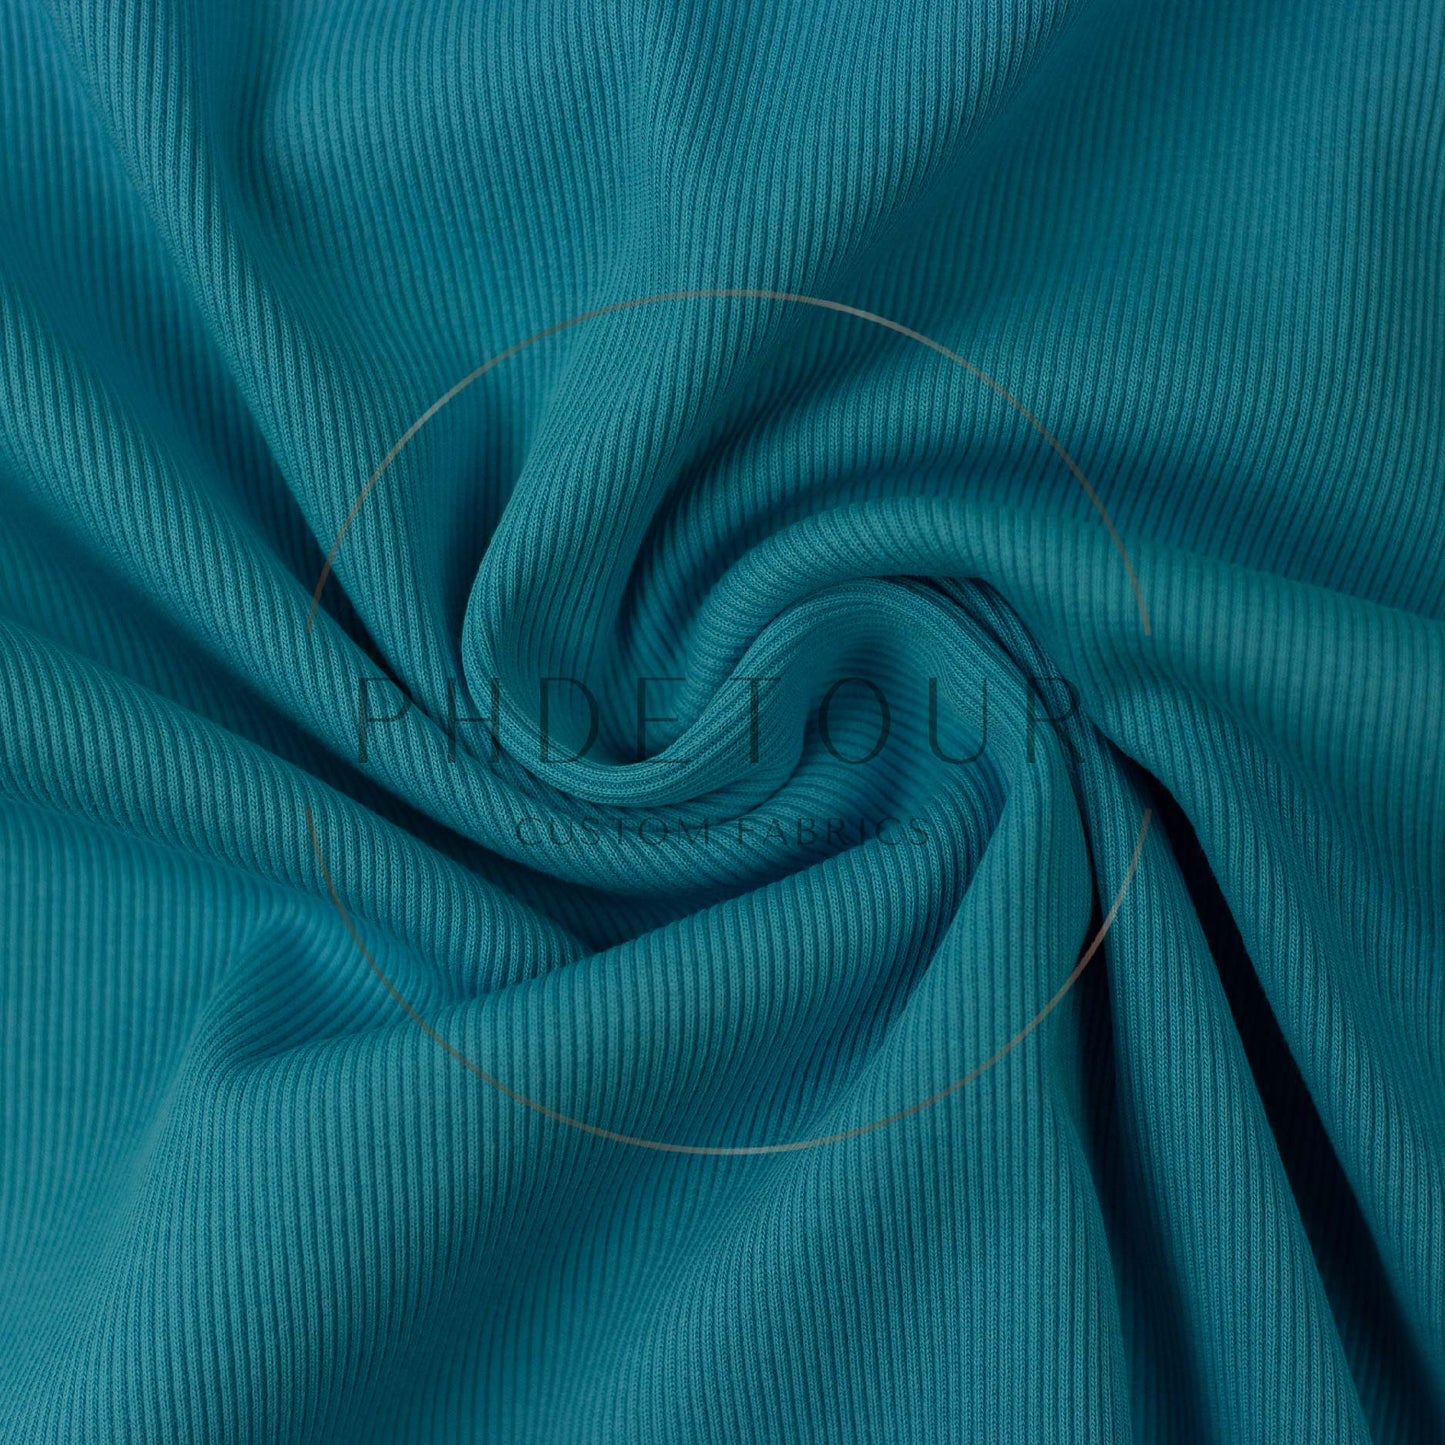 Wholesale European 2x1 Sweatshirt Ribbing - 841 - Turquoise